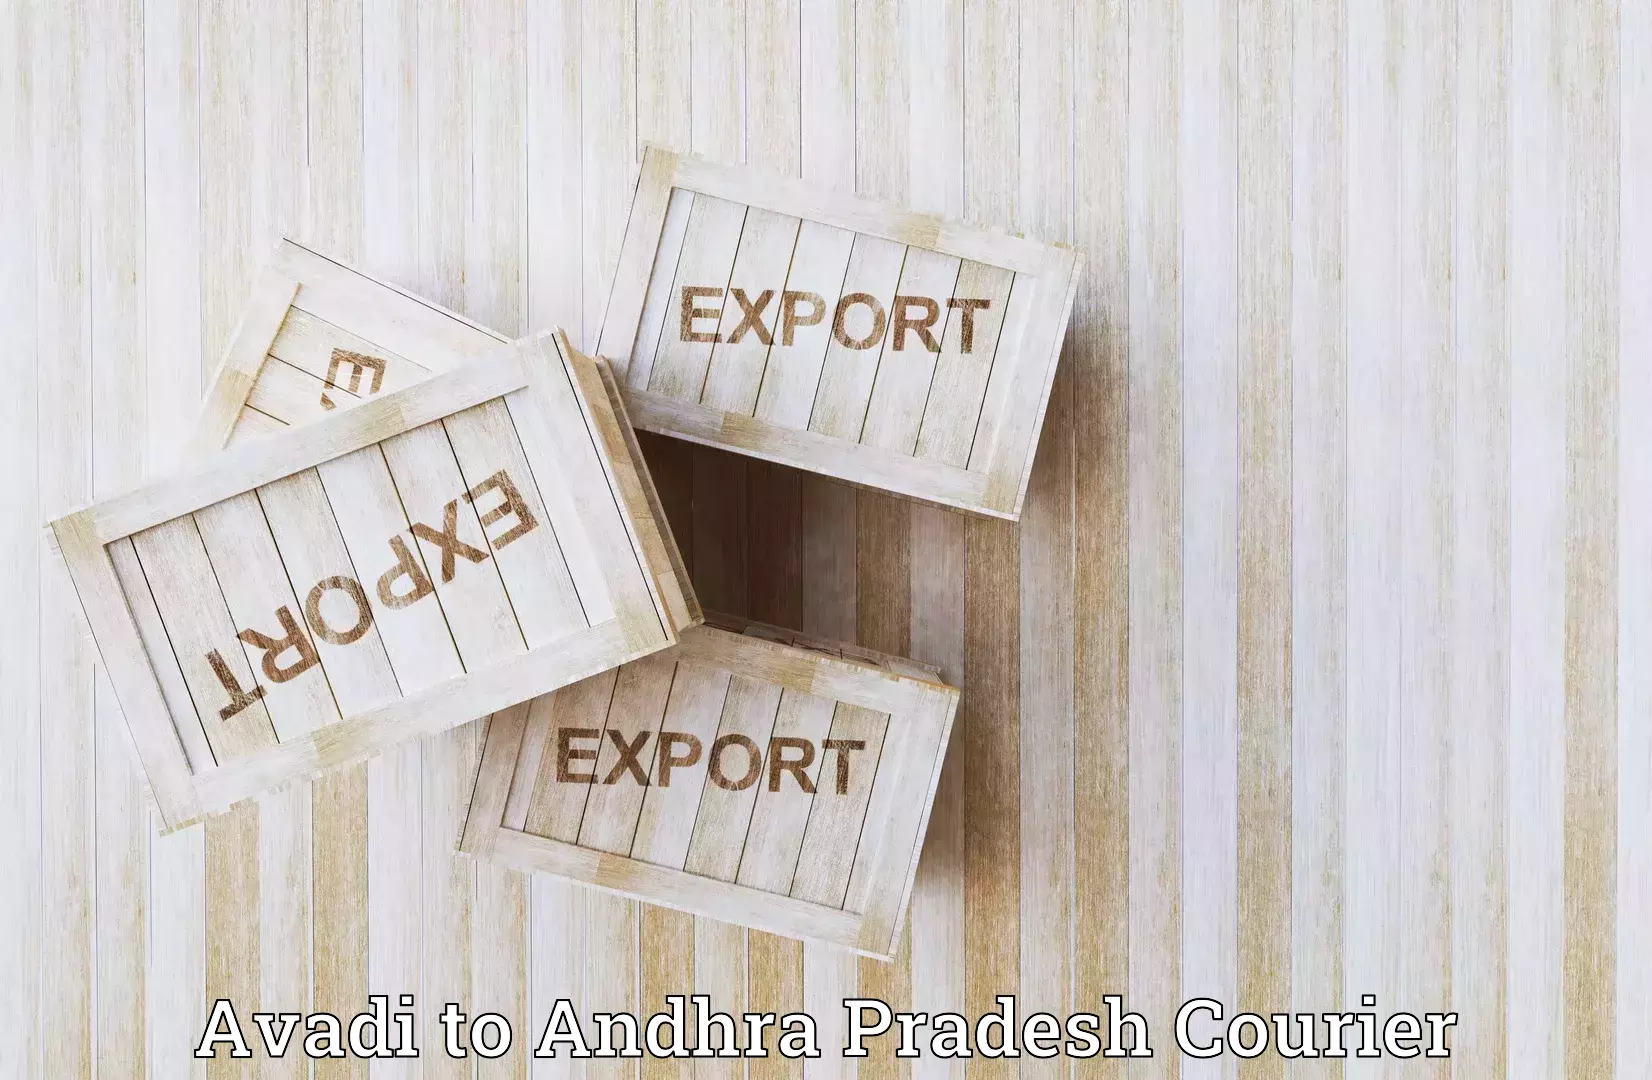 Ocean freight courier Avadi to Andhra Pradesh